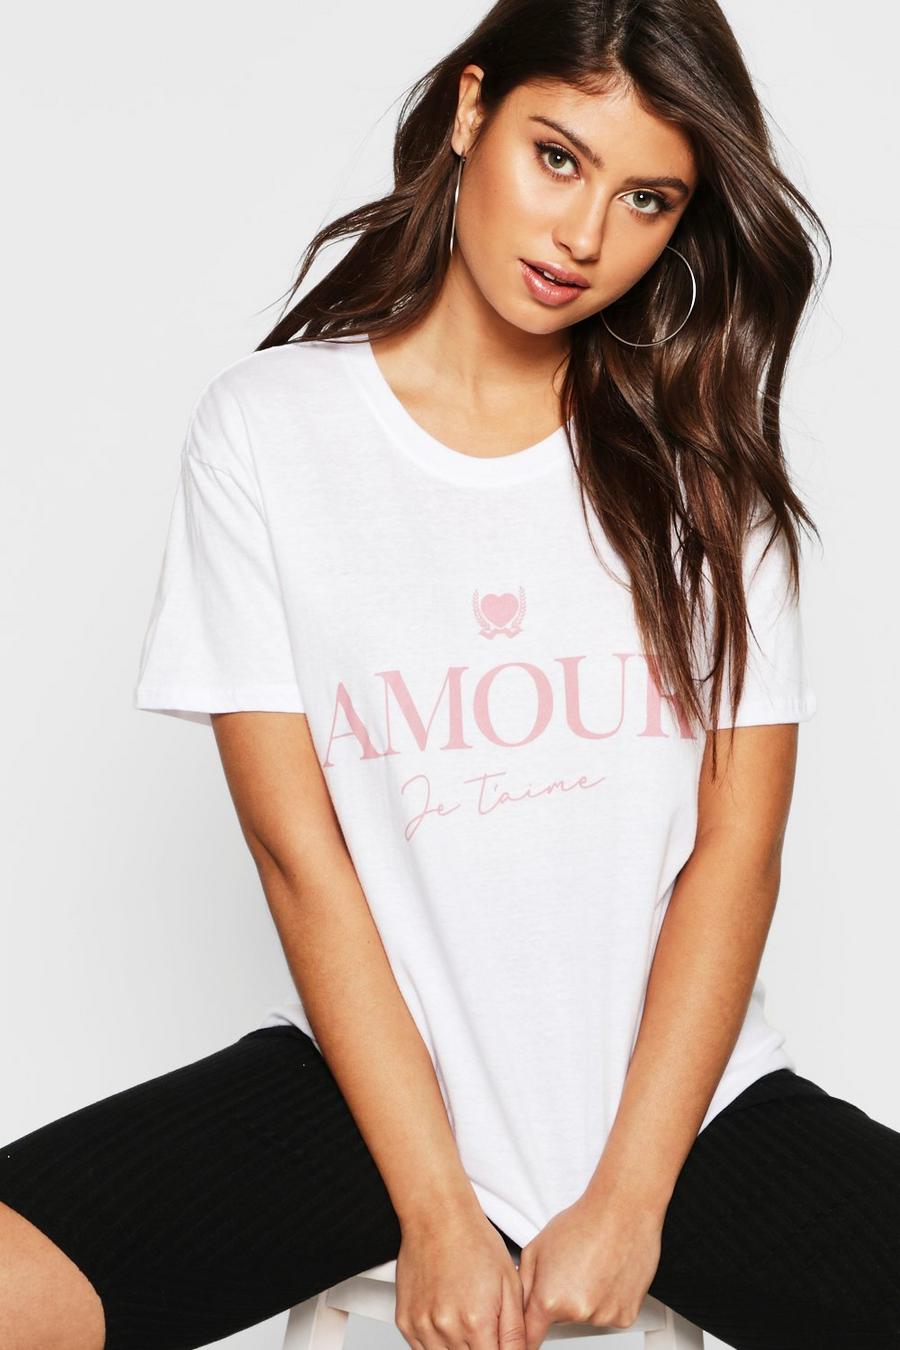 Camiseta con eslogan "Amour" Tall image number 1